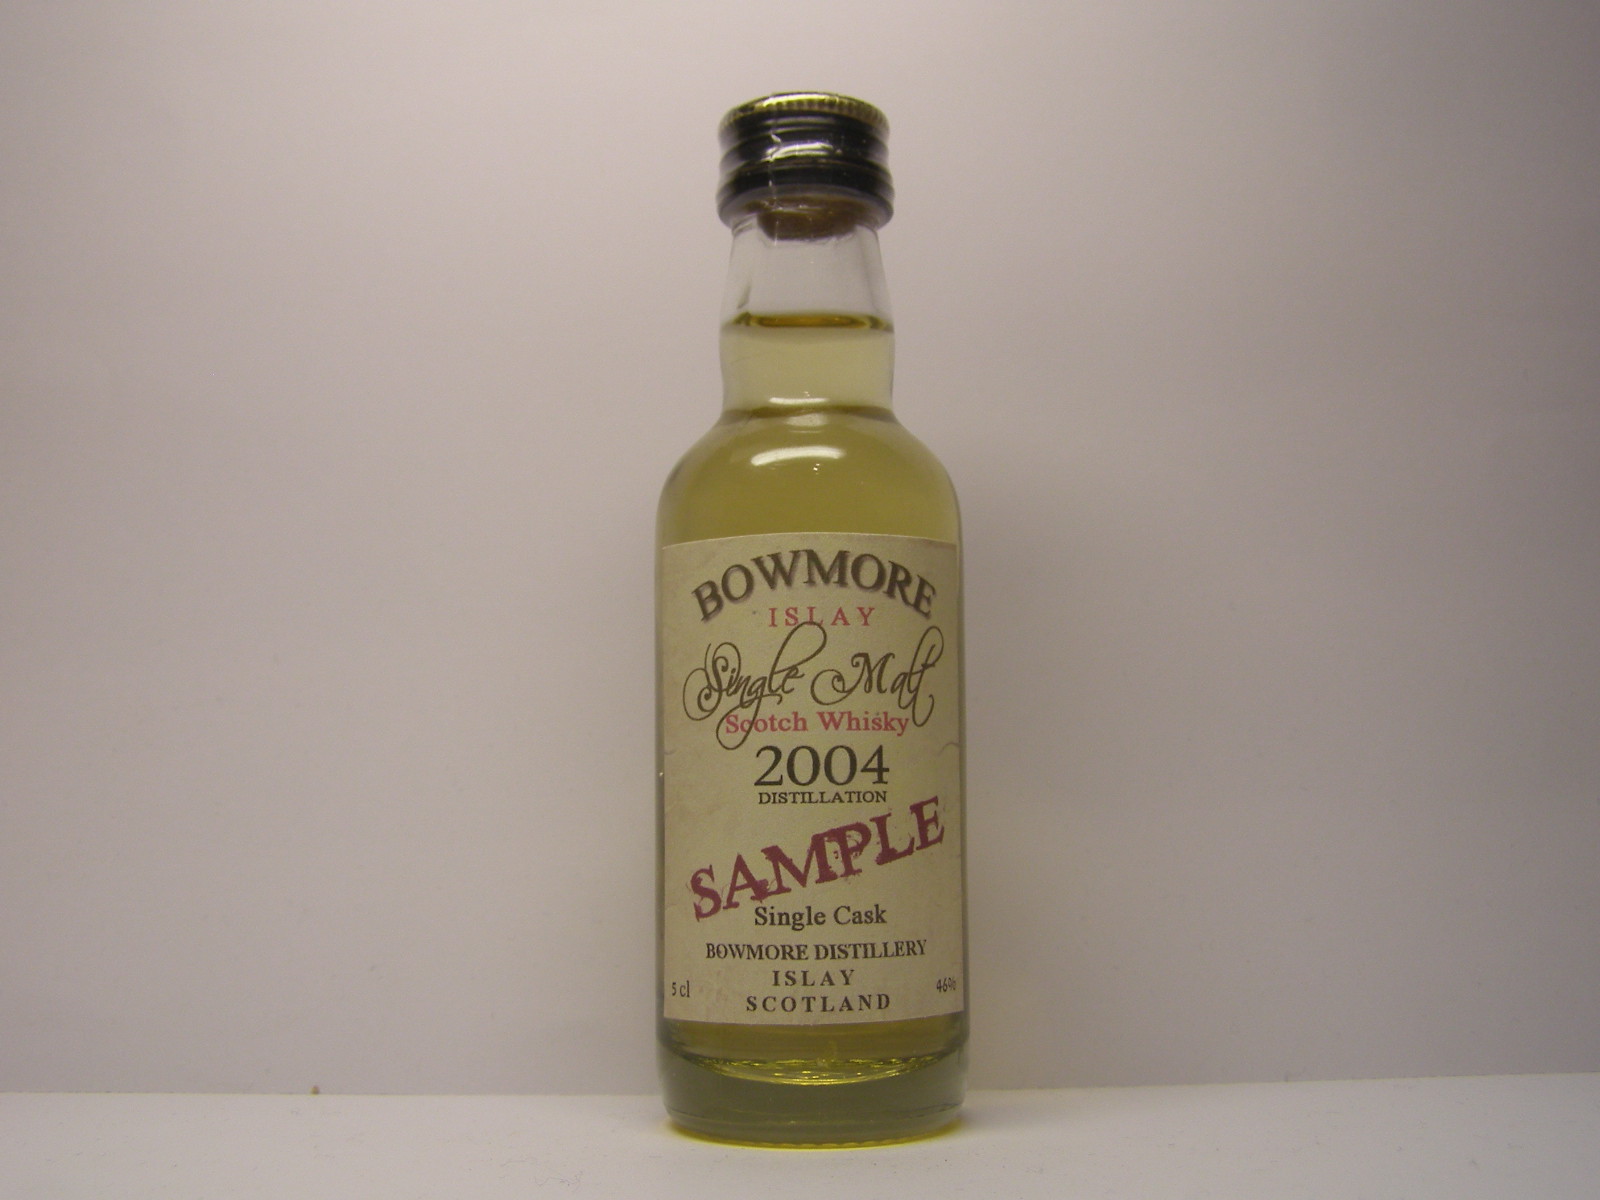 SAMPLE ISMSW 2004 5cl 46%